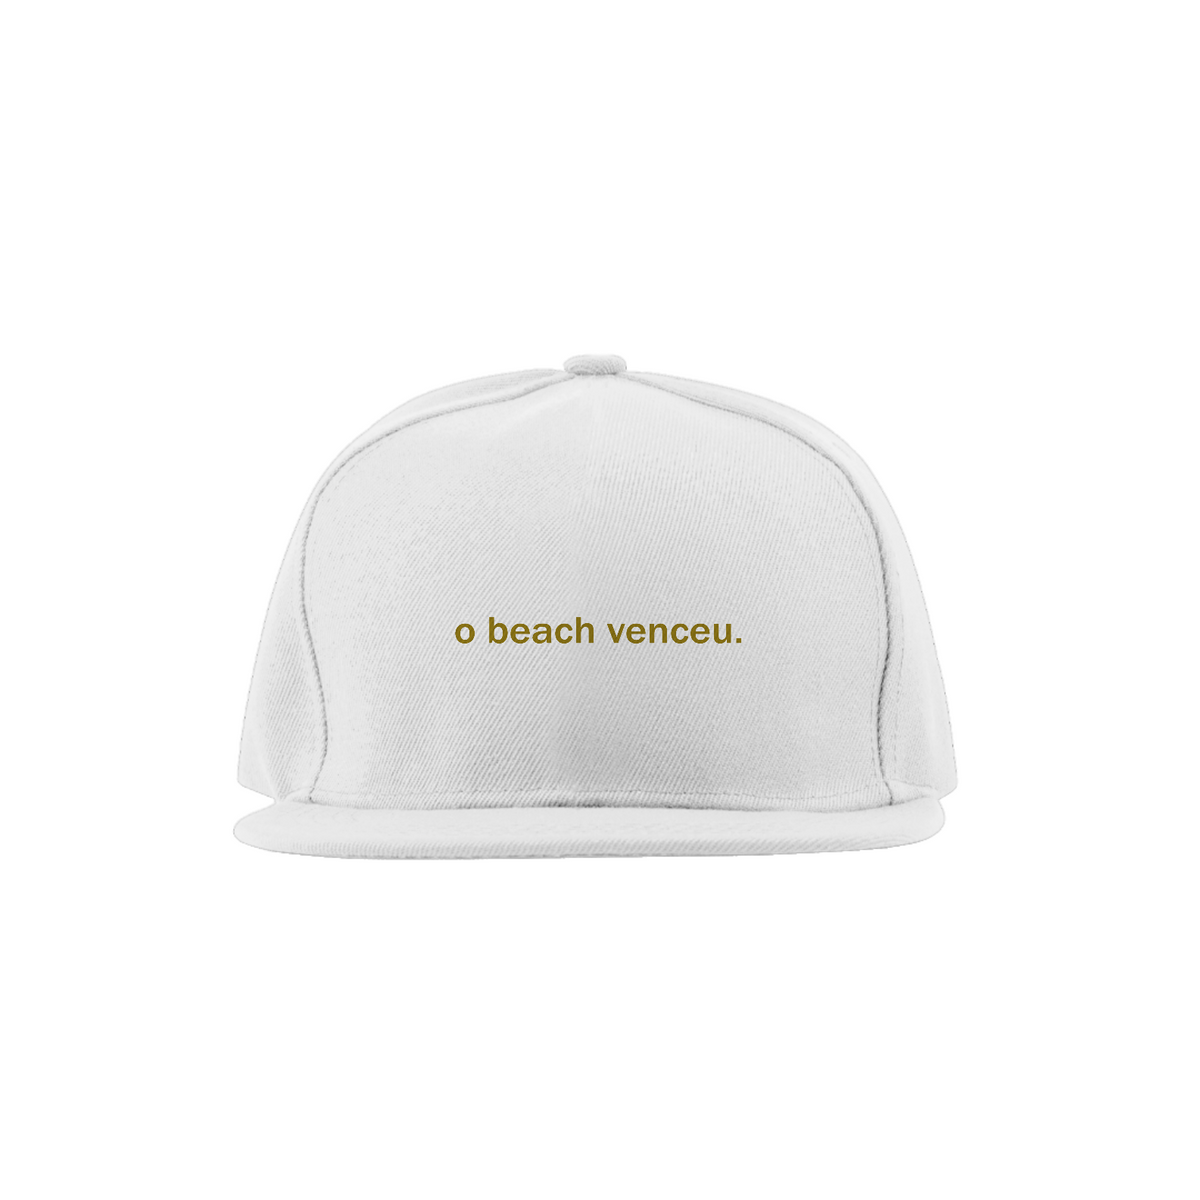 Nome do produto: O Beach Venceu